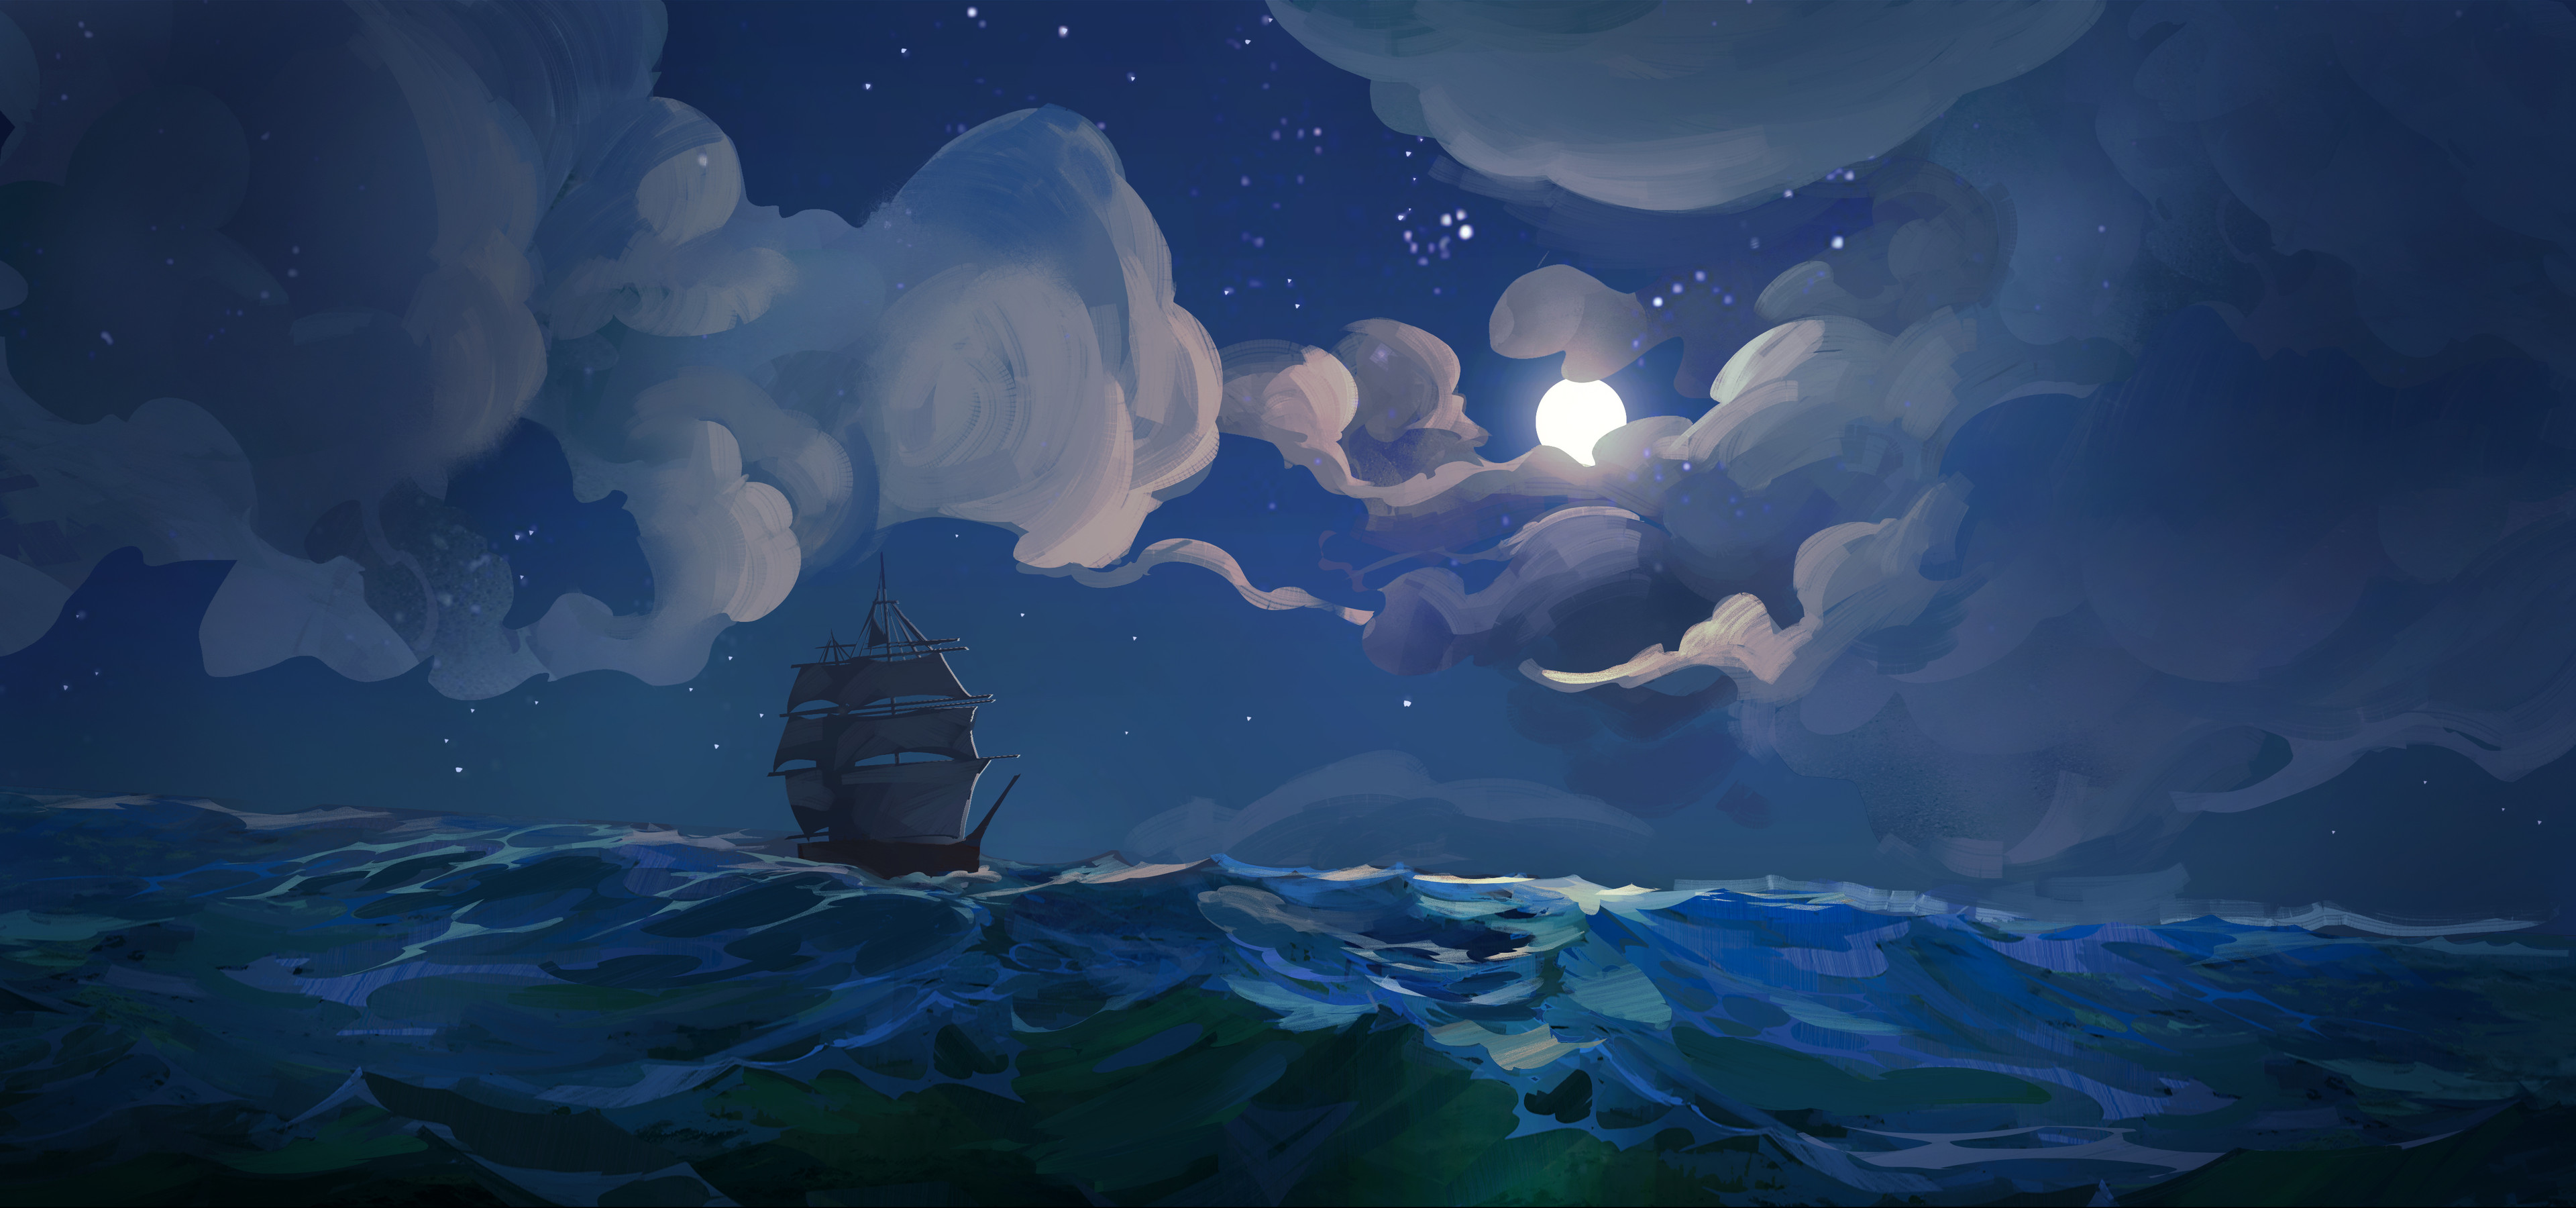 General 3840x1800 Hue Teo digital art artwork illustration sea night boat clouds Moon sky water moonlight ship waves stars